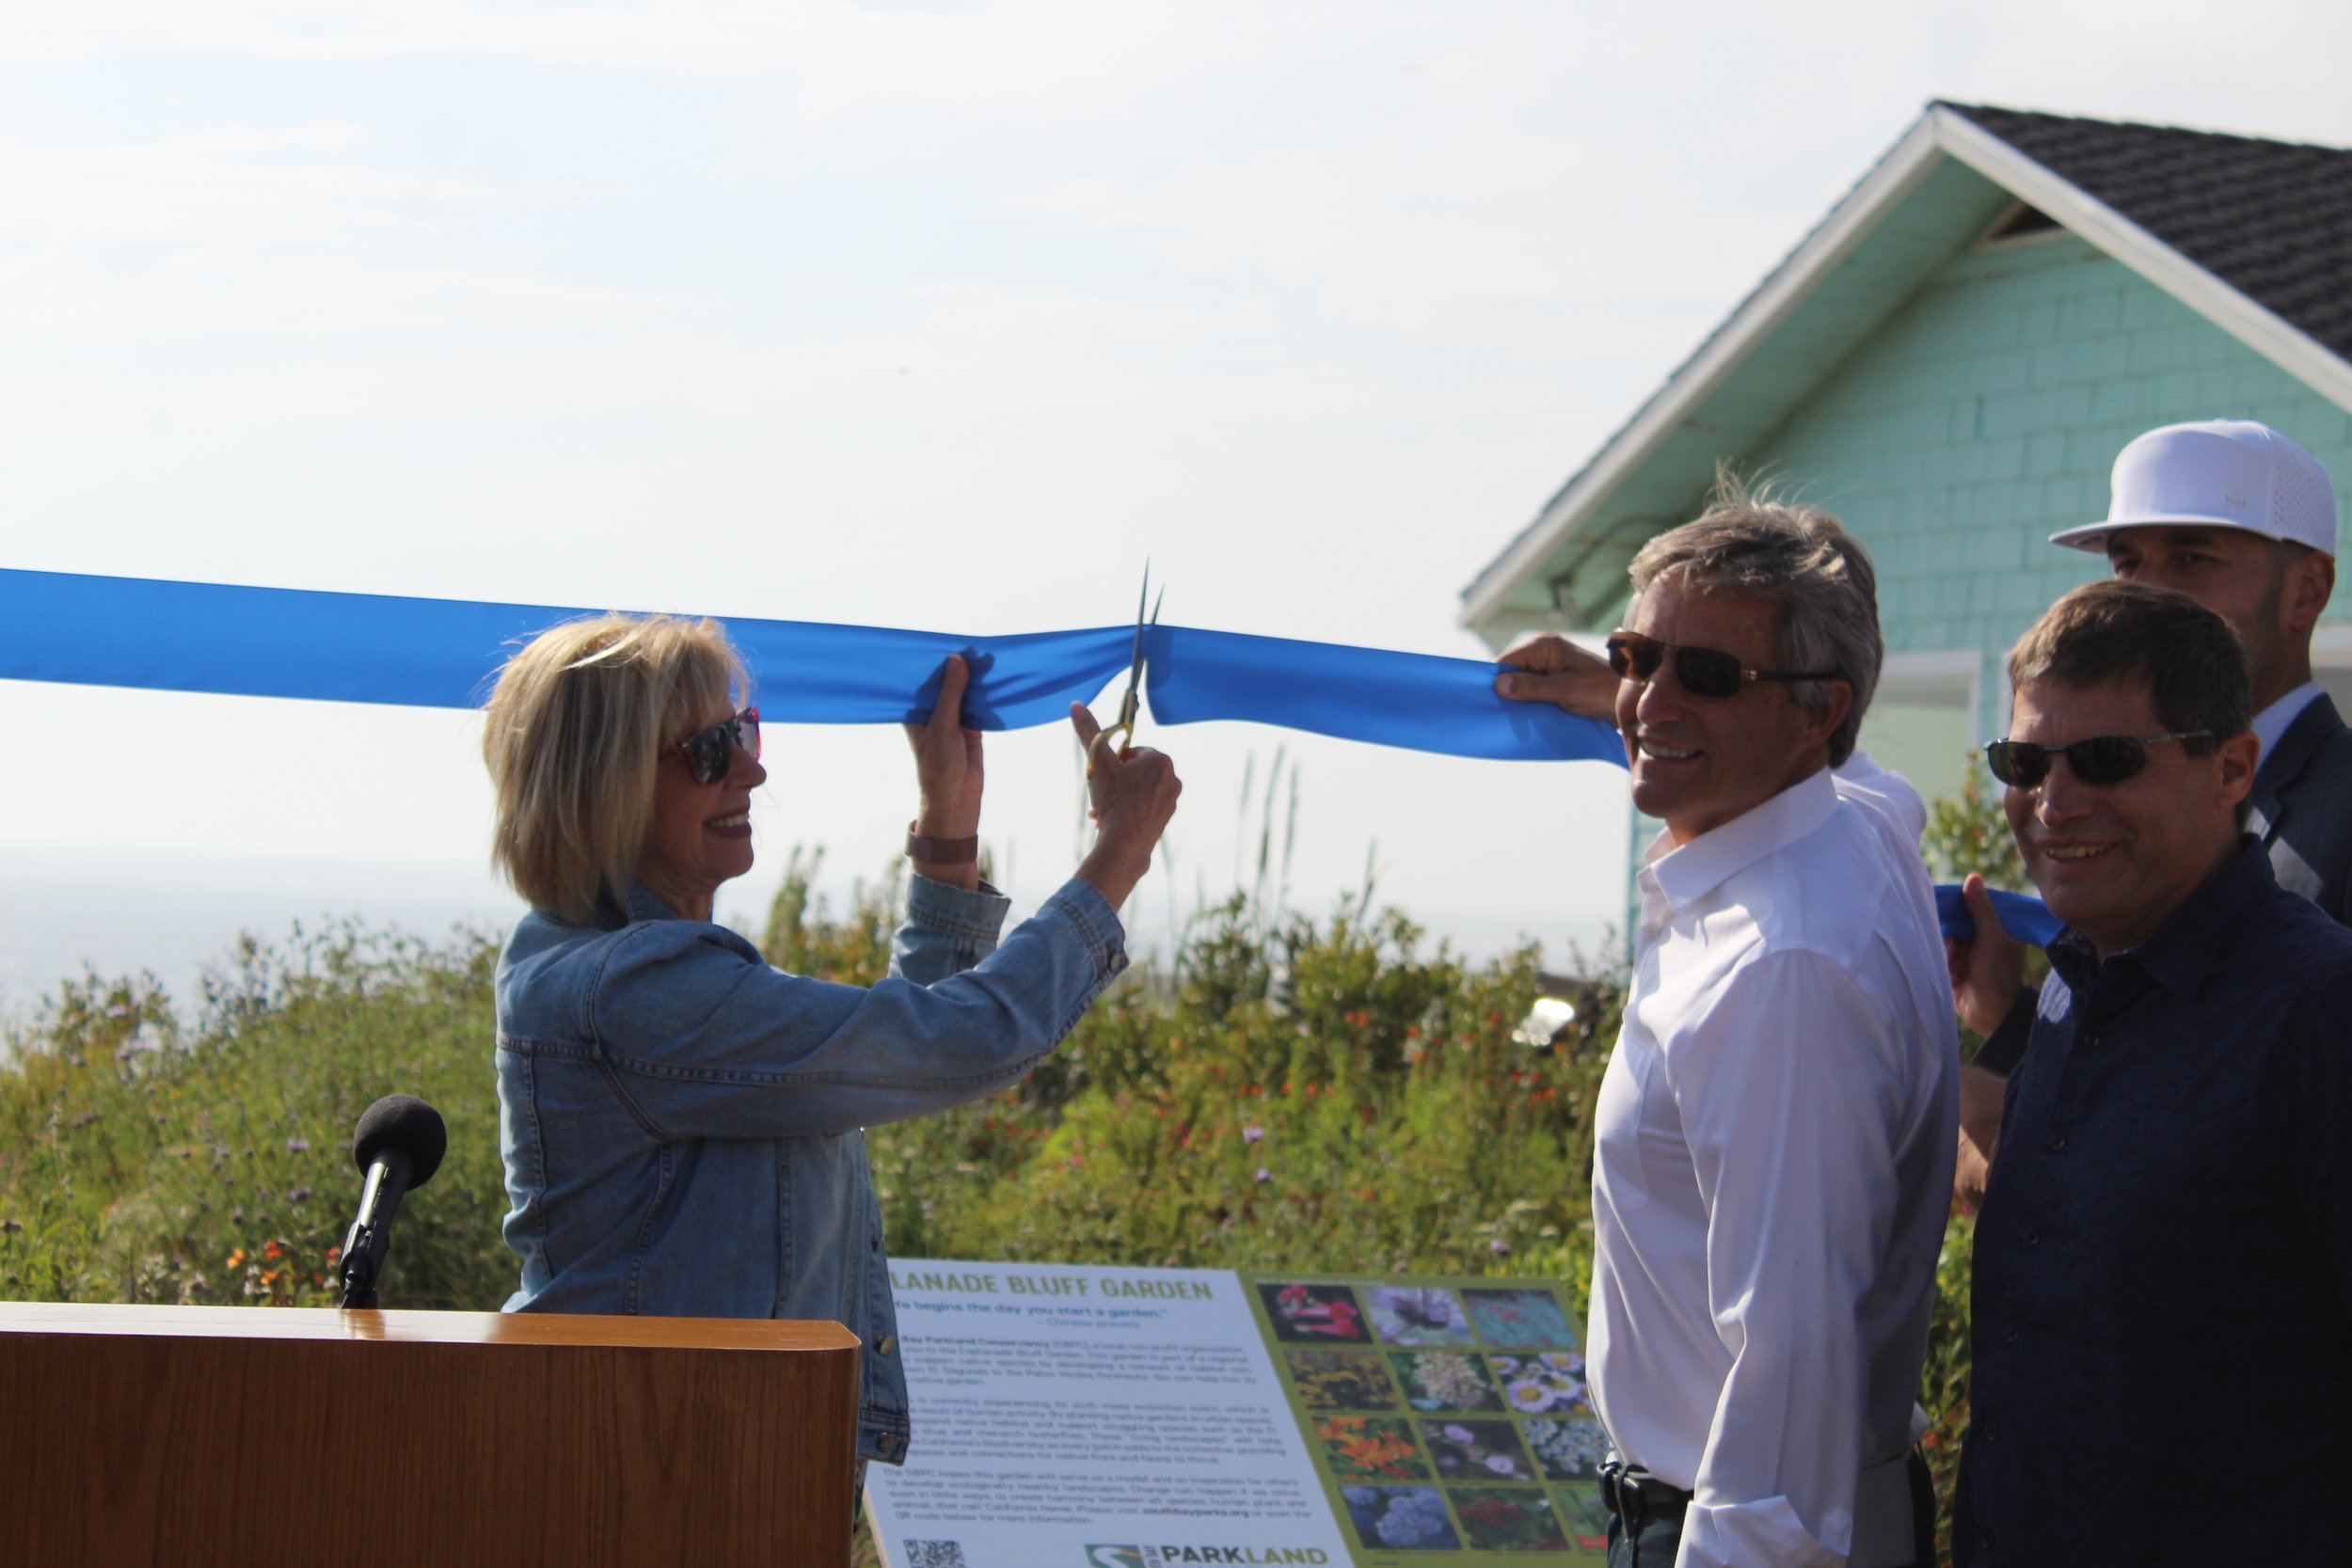 Image of SBPC Esplanade Bluff garden ribbon cutting ceremony